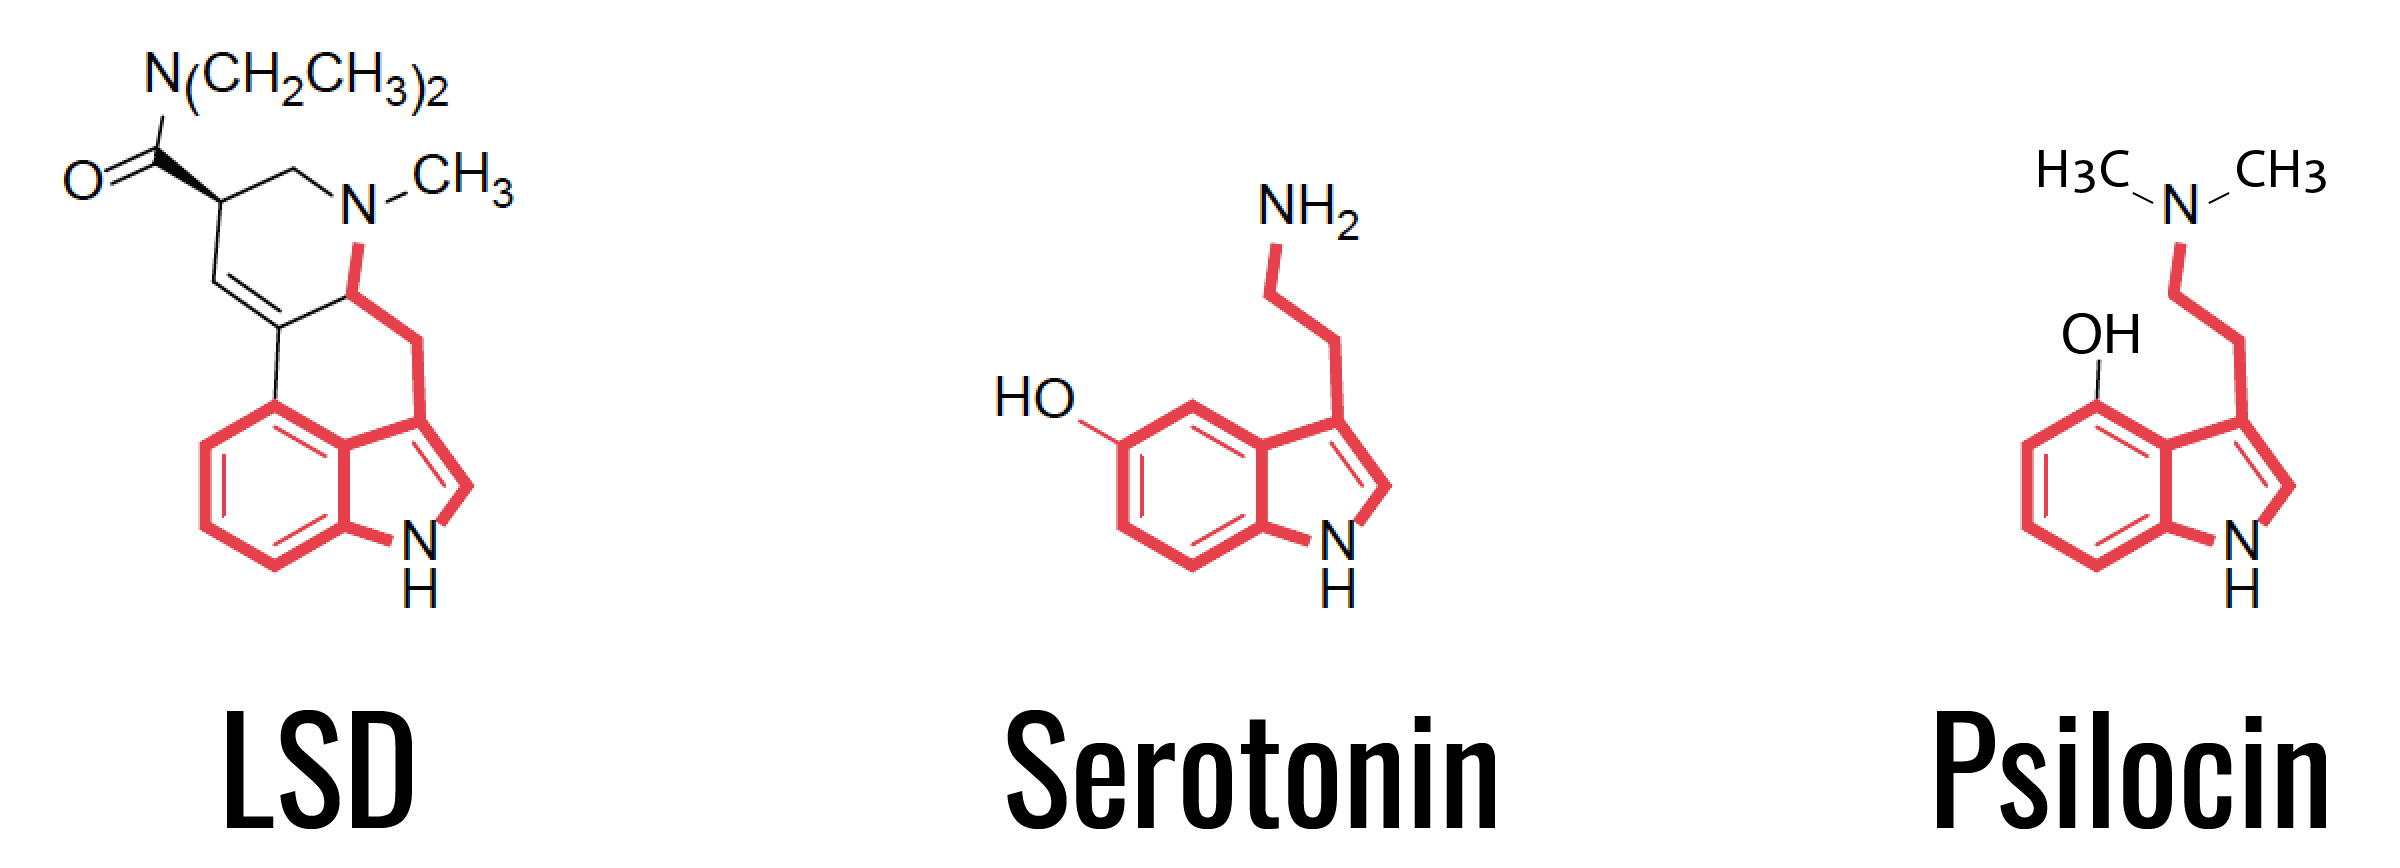 Chemical structure of serotonin, LSD and psilocin